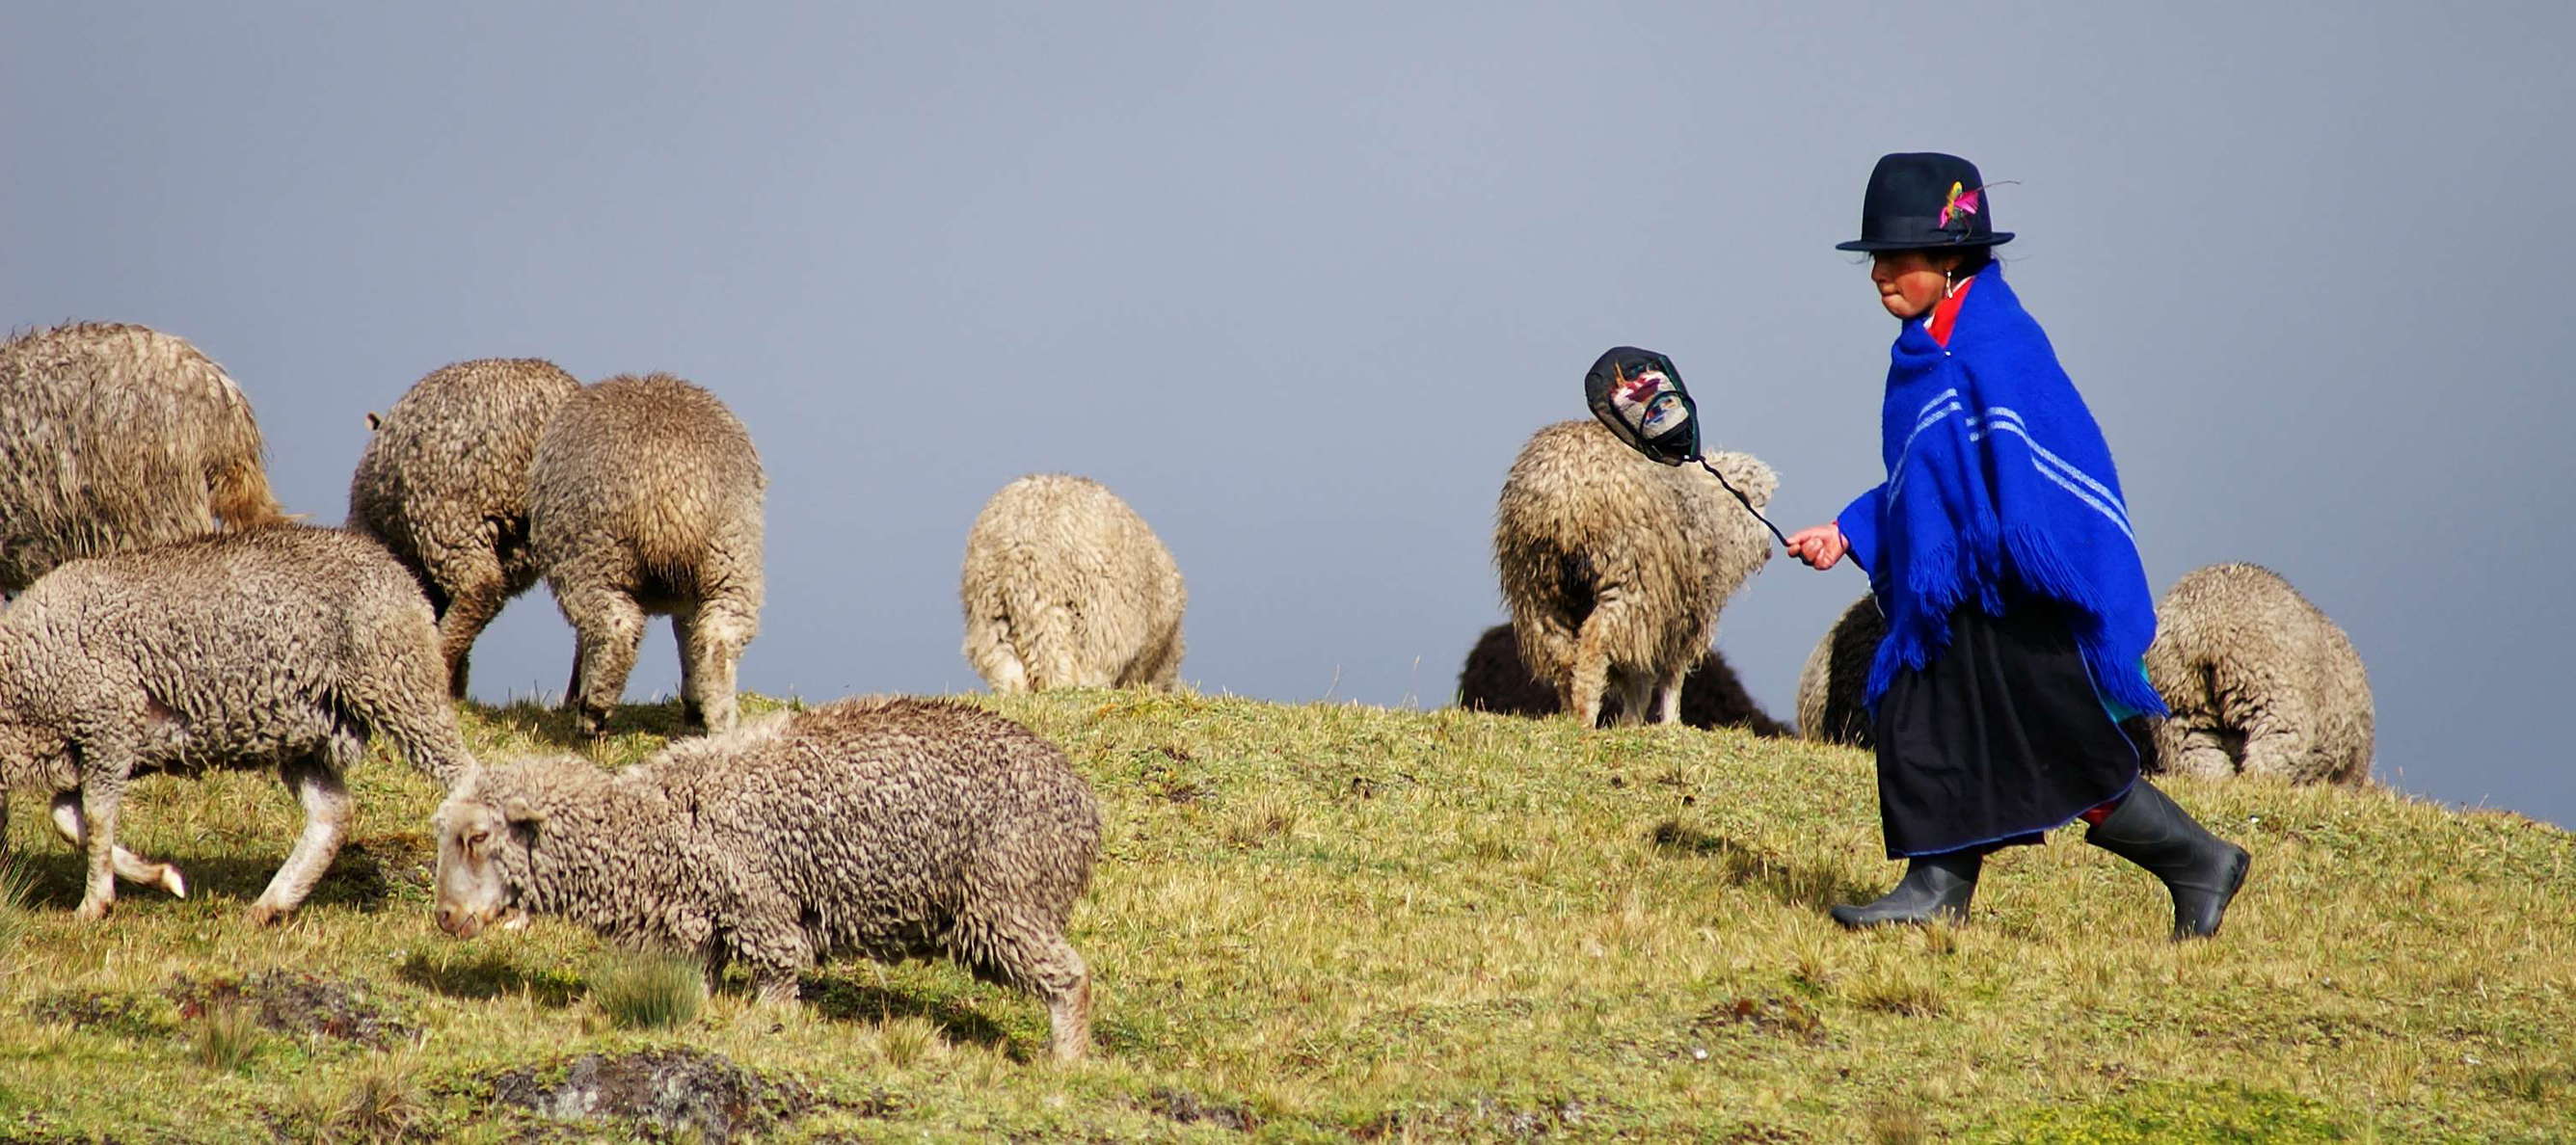 Páramo de Chimborazo  |  Sheep herding